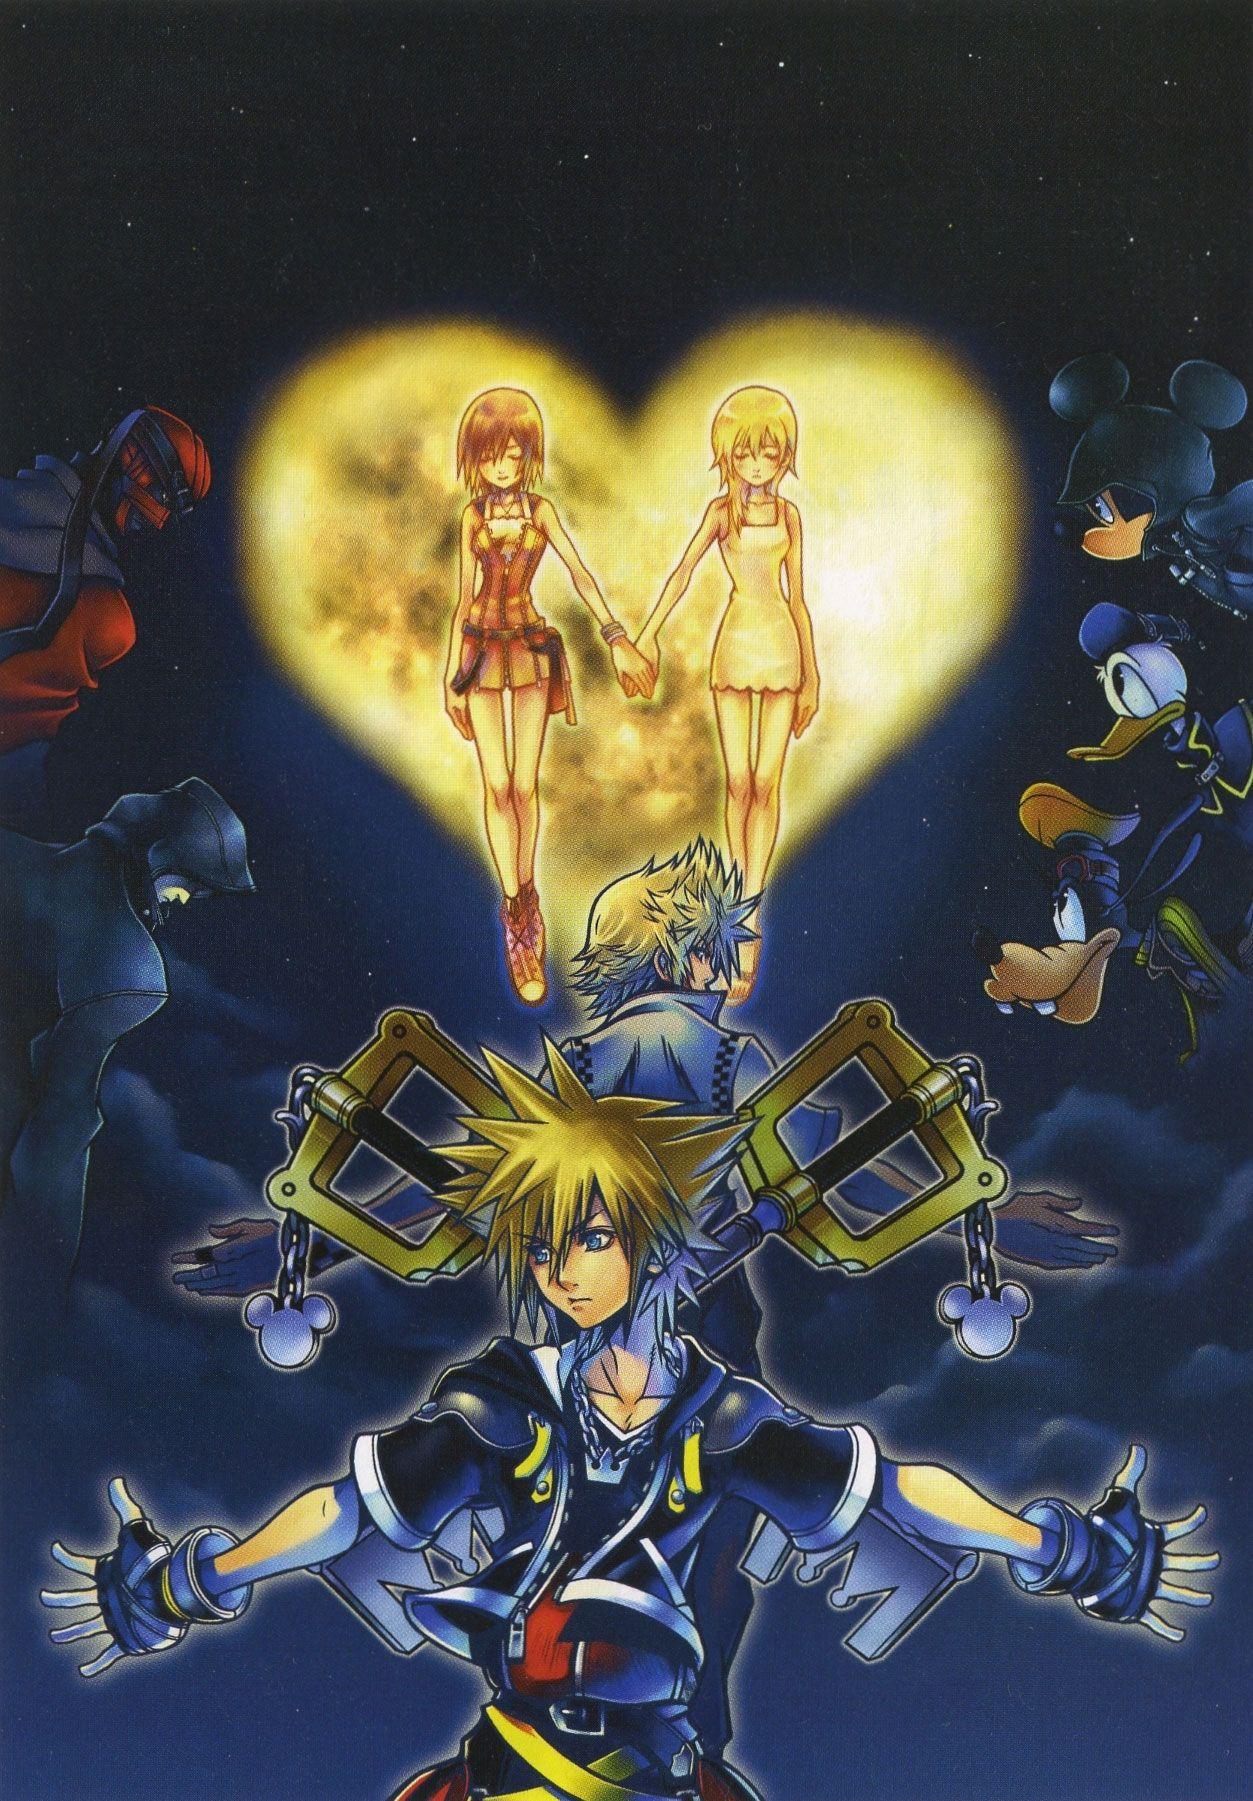 Kingdom Hearts 2 Wallpapers, wallpaper, Kingdom Hearts 2